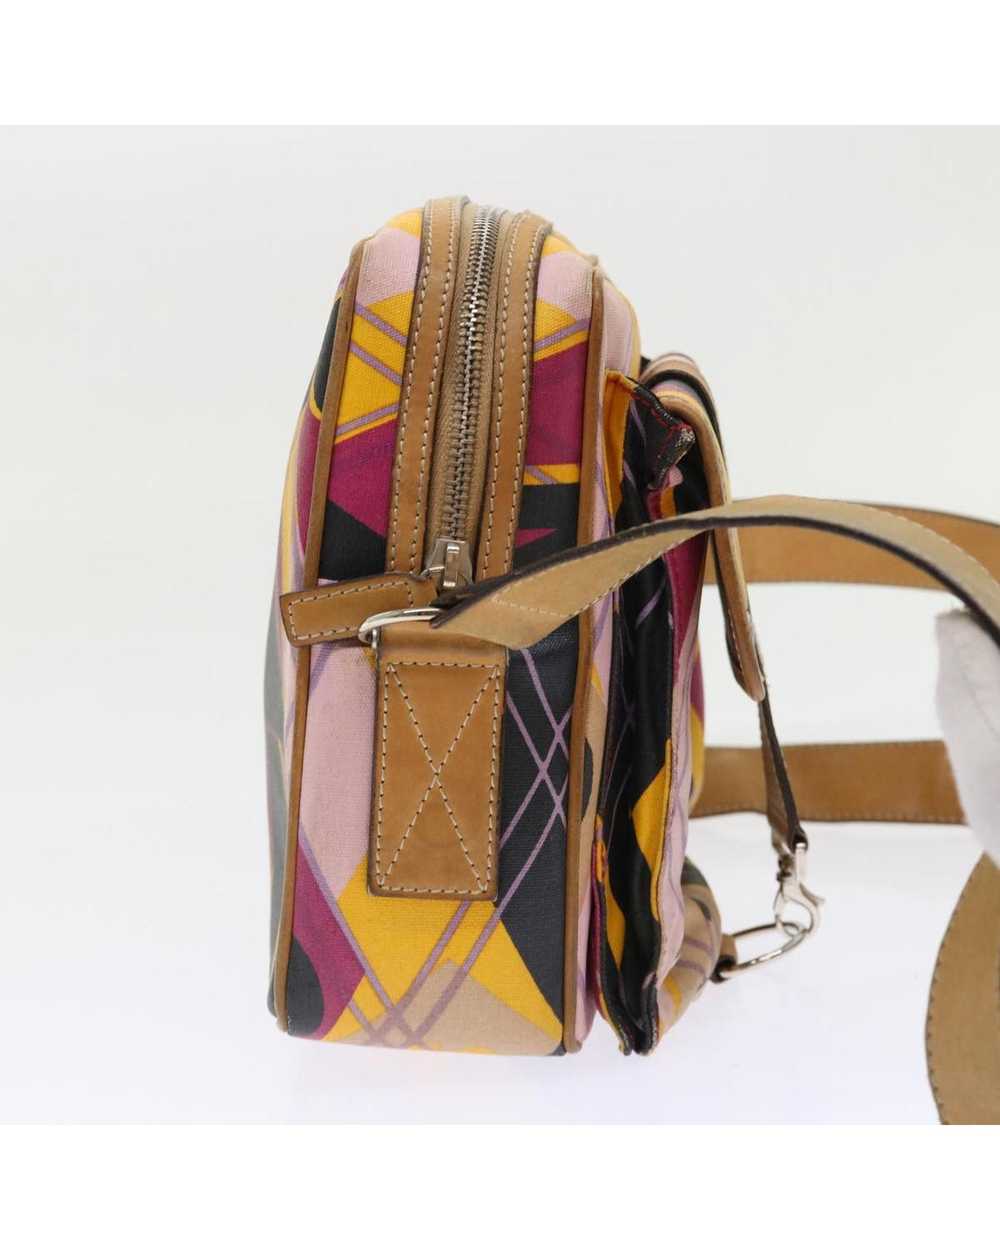 Dior Practical and Elegant Christian Dior Bag - image 3